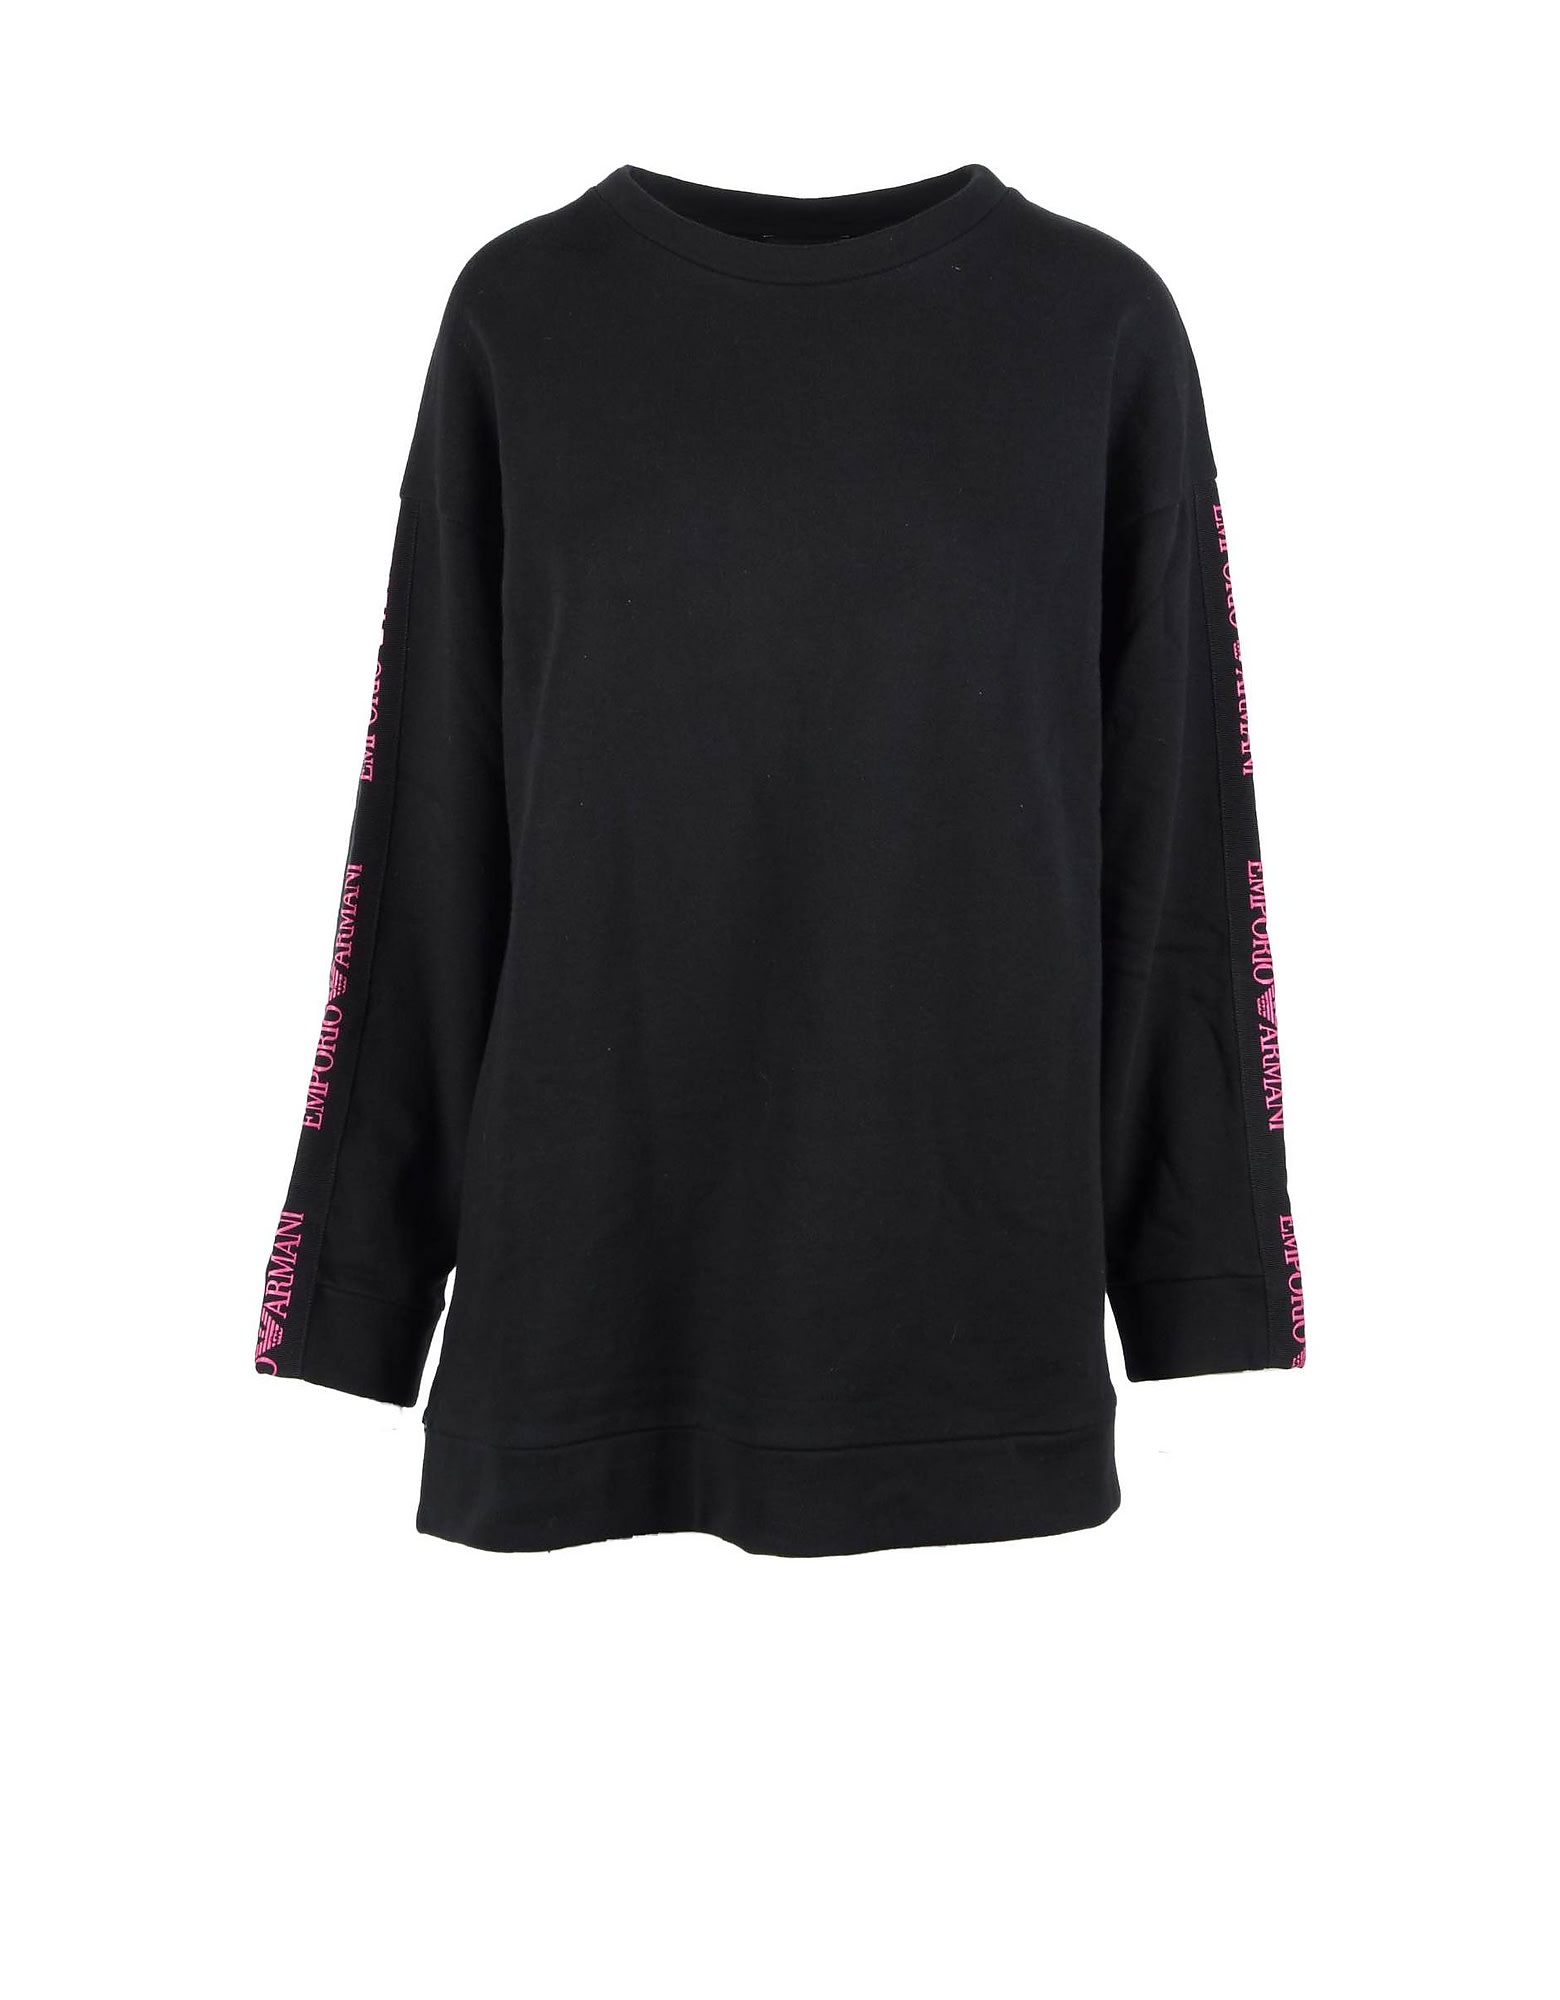 Emporio Armani Womens Black Sweatshirt